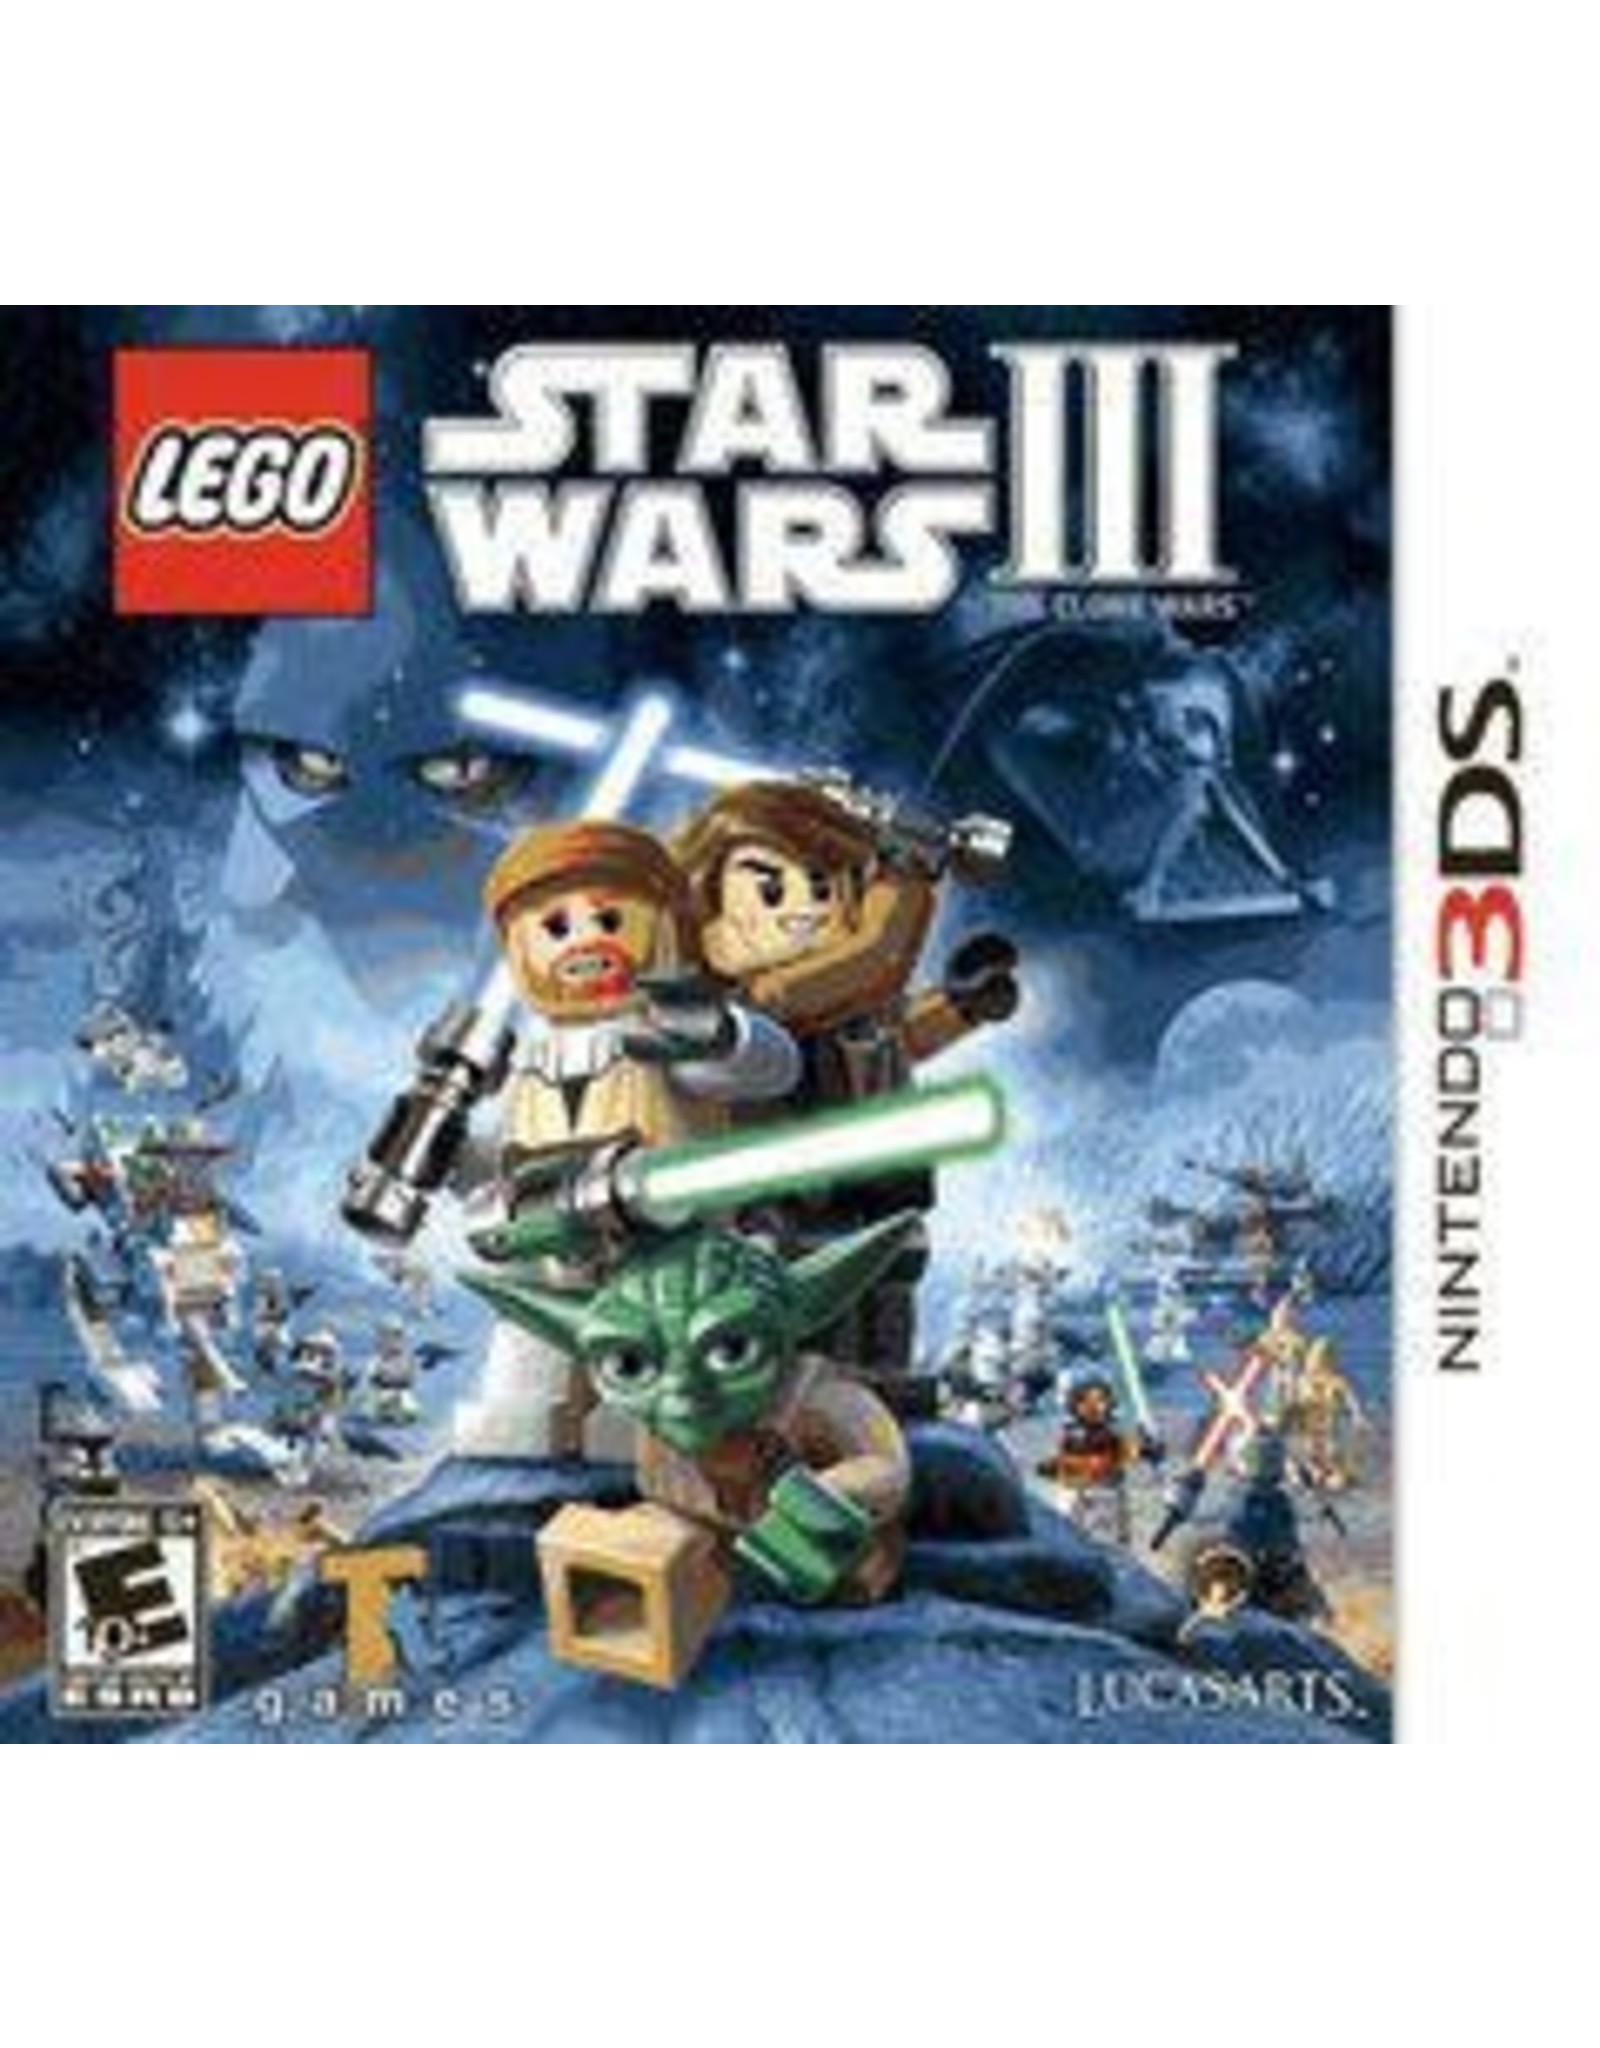 Nintendo 3DS LEGO Star Wars III: The Clone Wars (CiB)